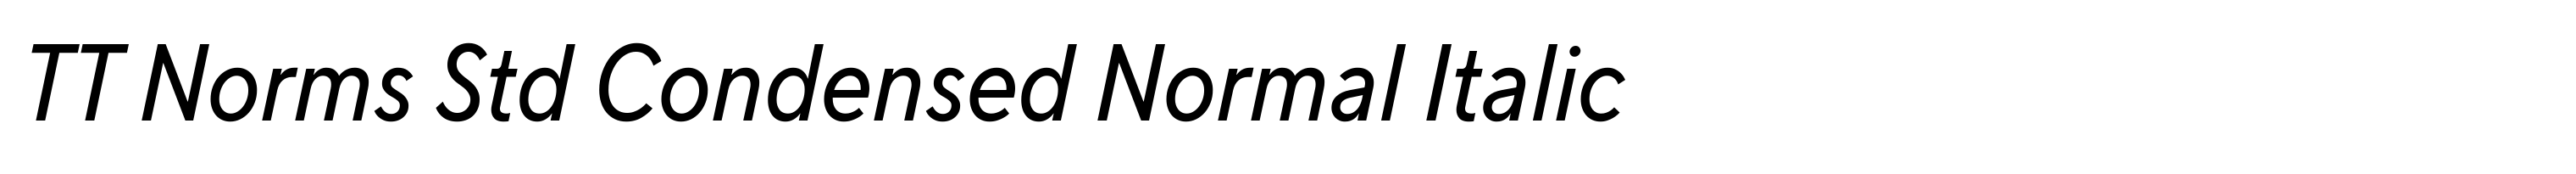 TT Norms Std Condensed Normal Italic